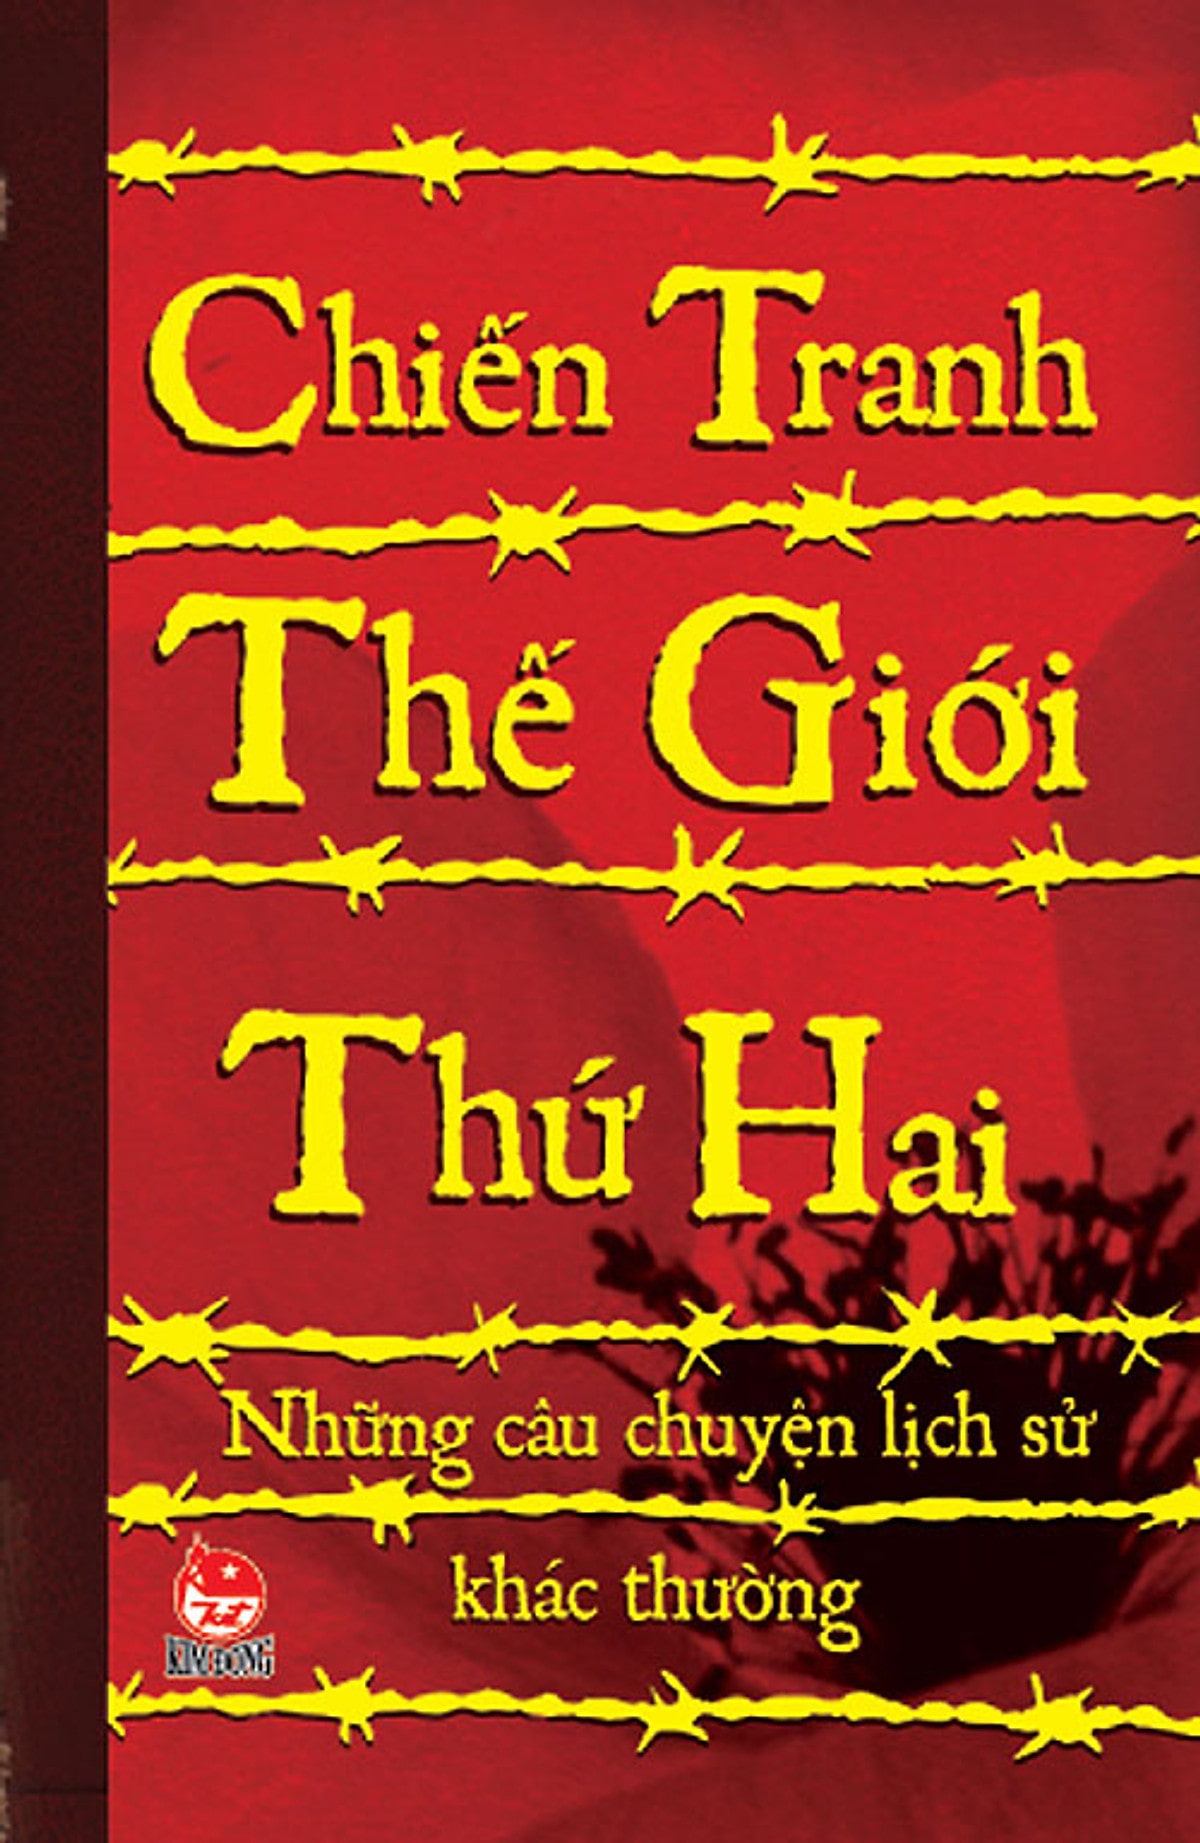 01 Nhưng Cau Chuyen Lich Su Khac Thuong Chien Tranh The Gioi Thu Hai Min